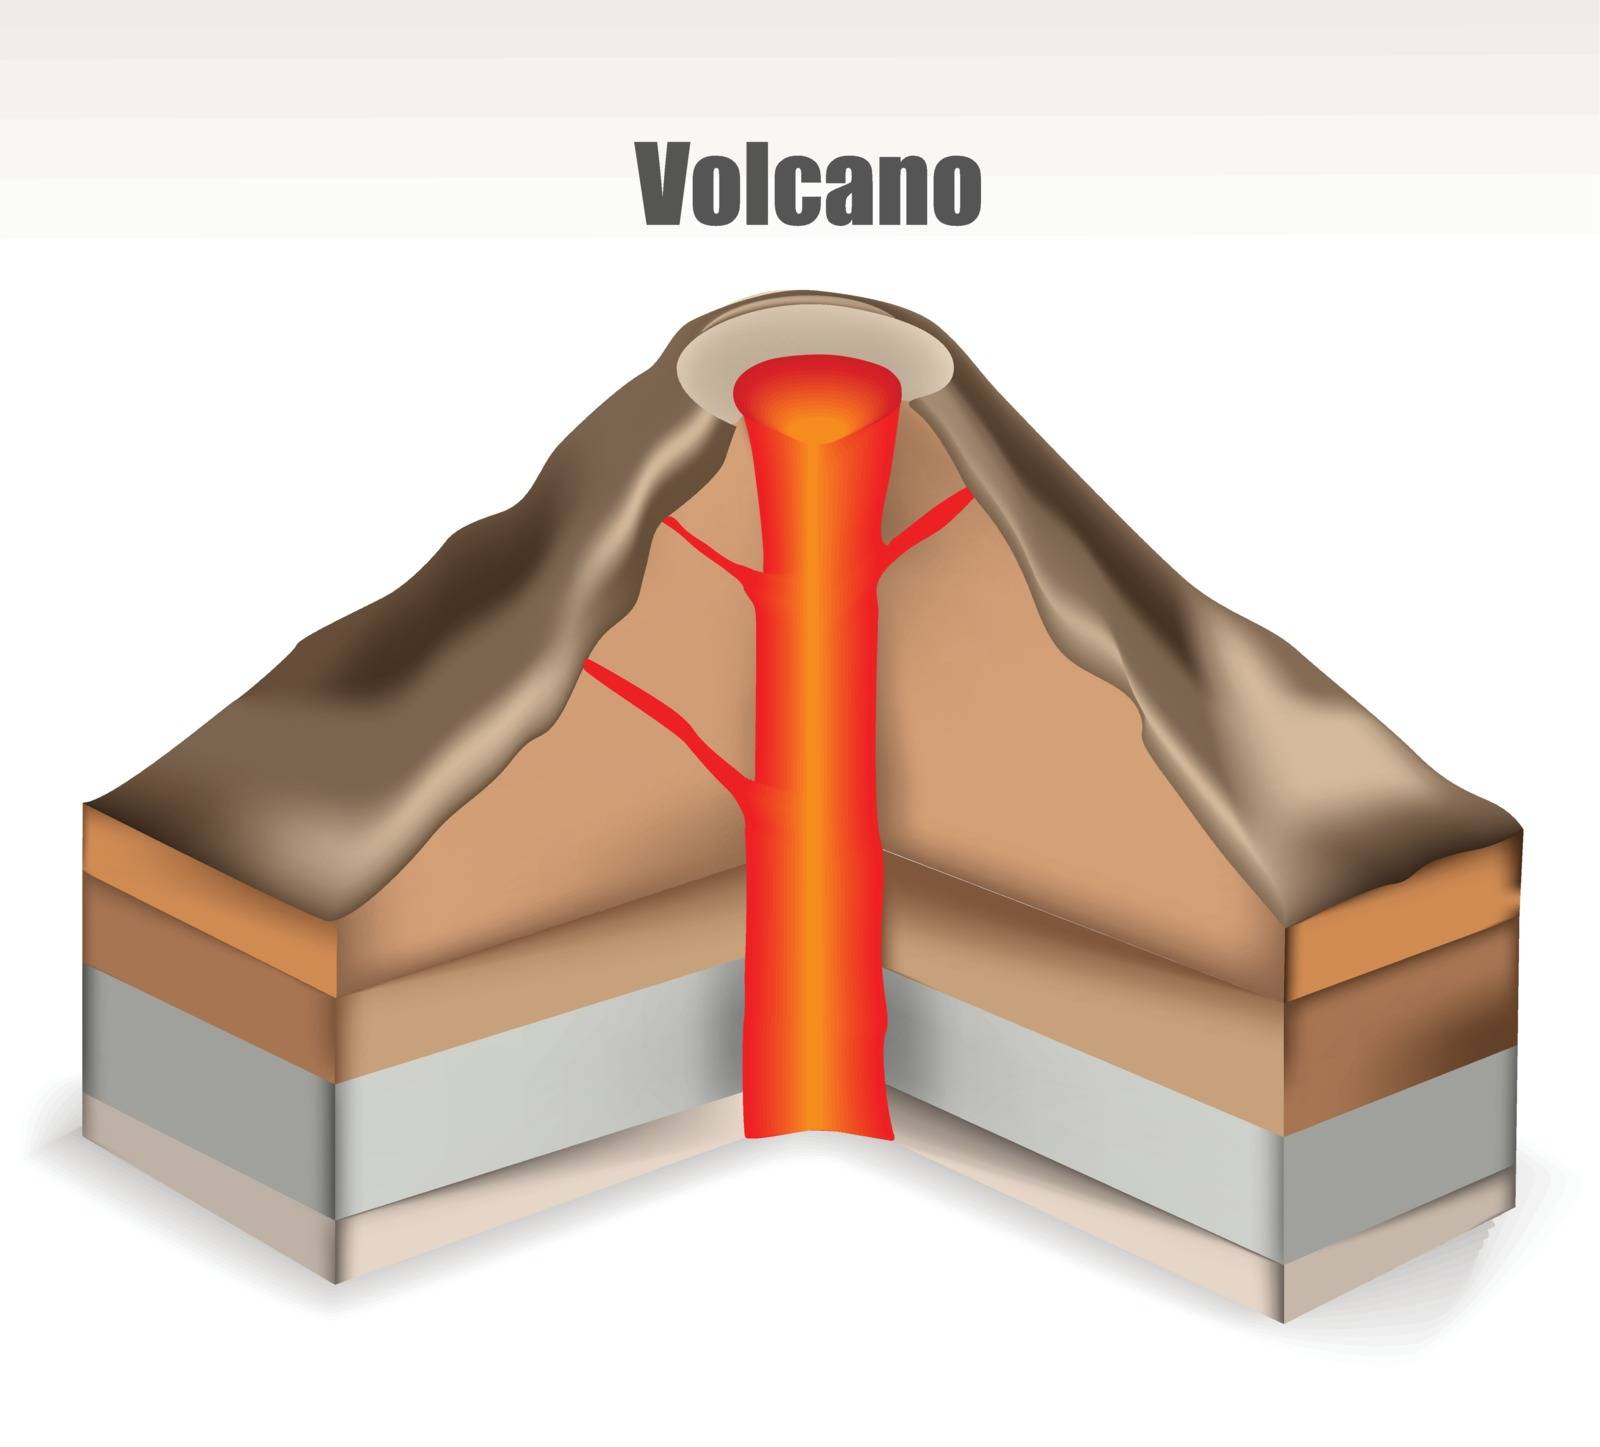 Volcano by robin2